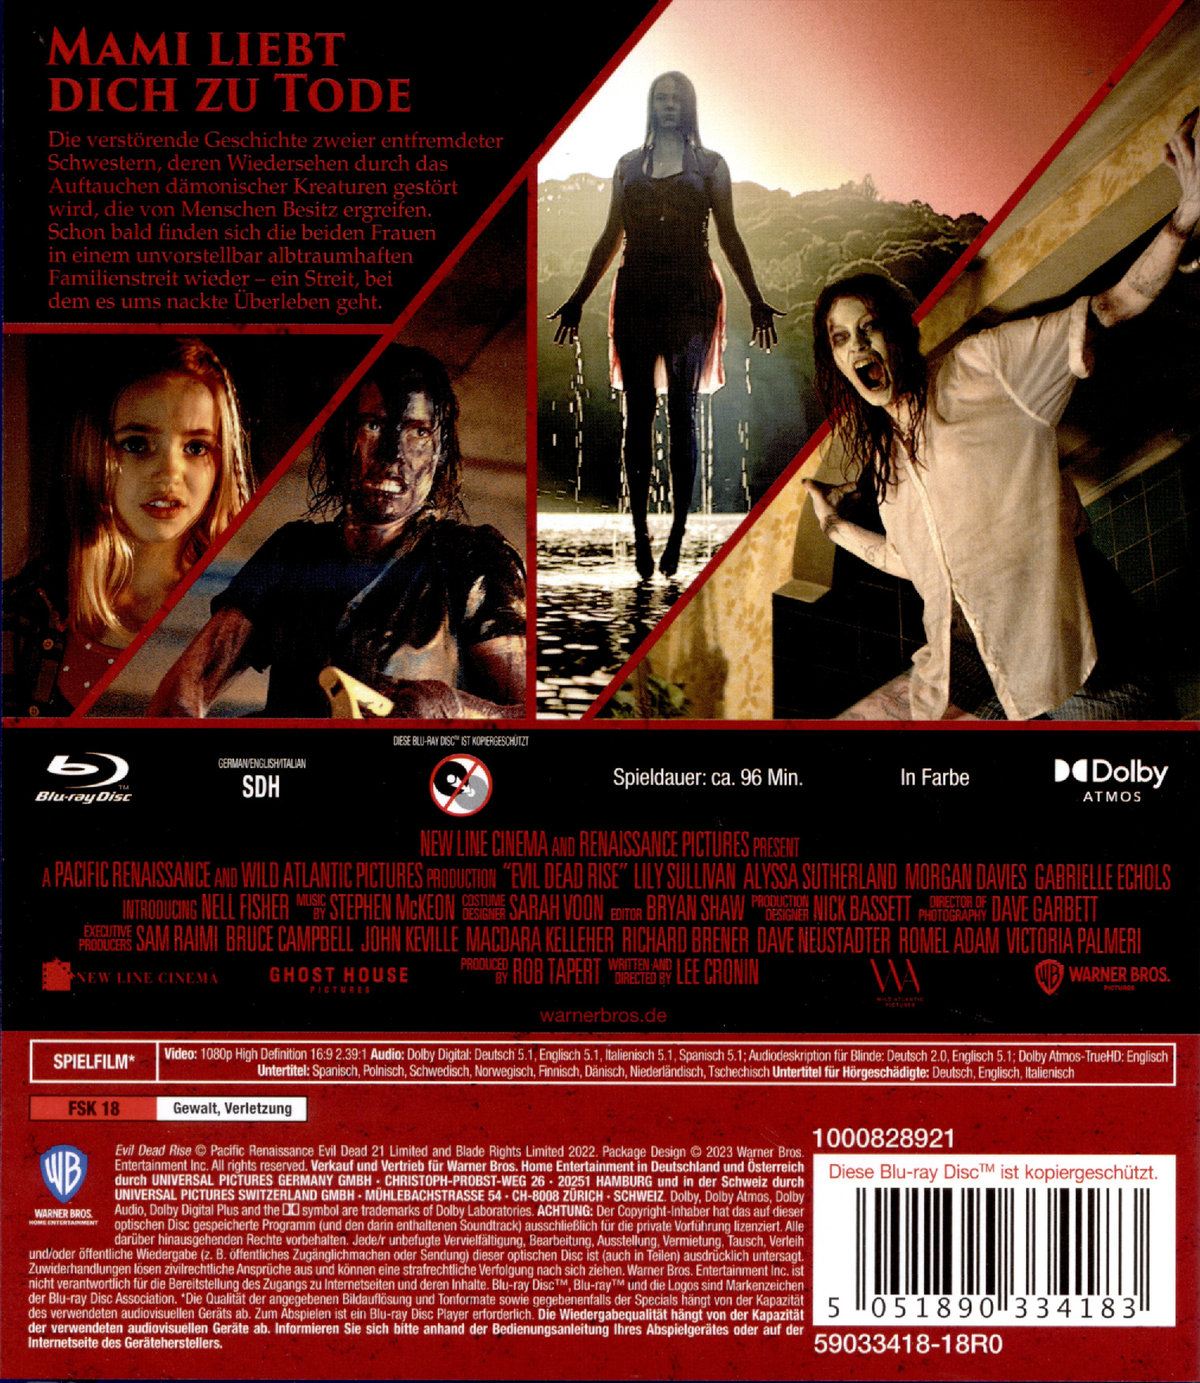 Evil Dead Rise  (Blu-ray Disc)